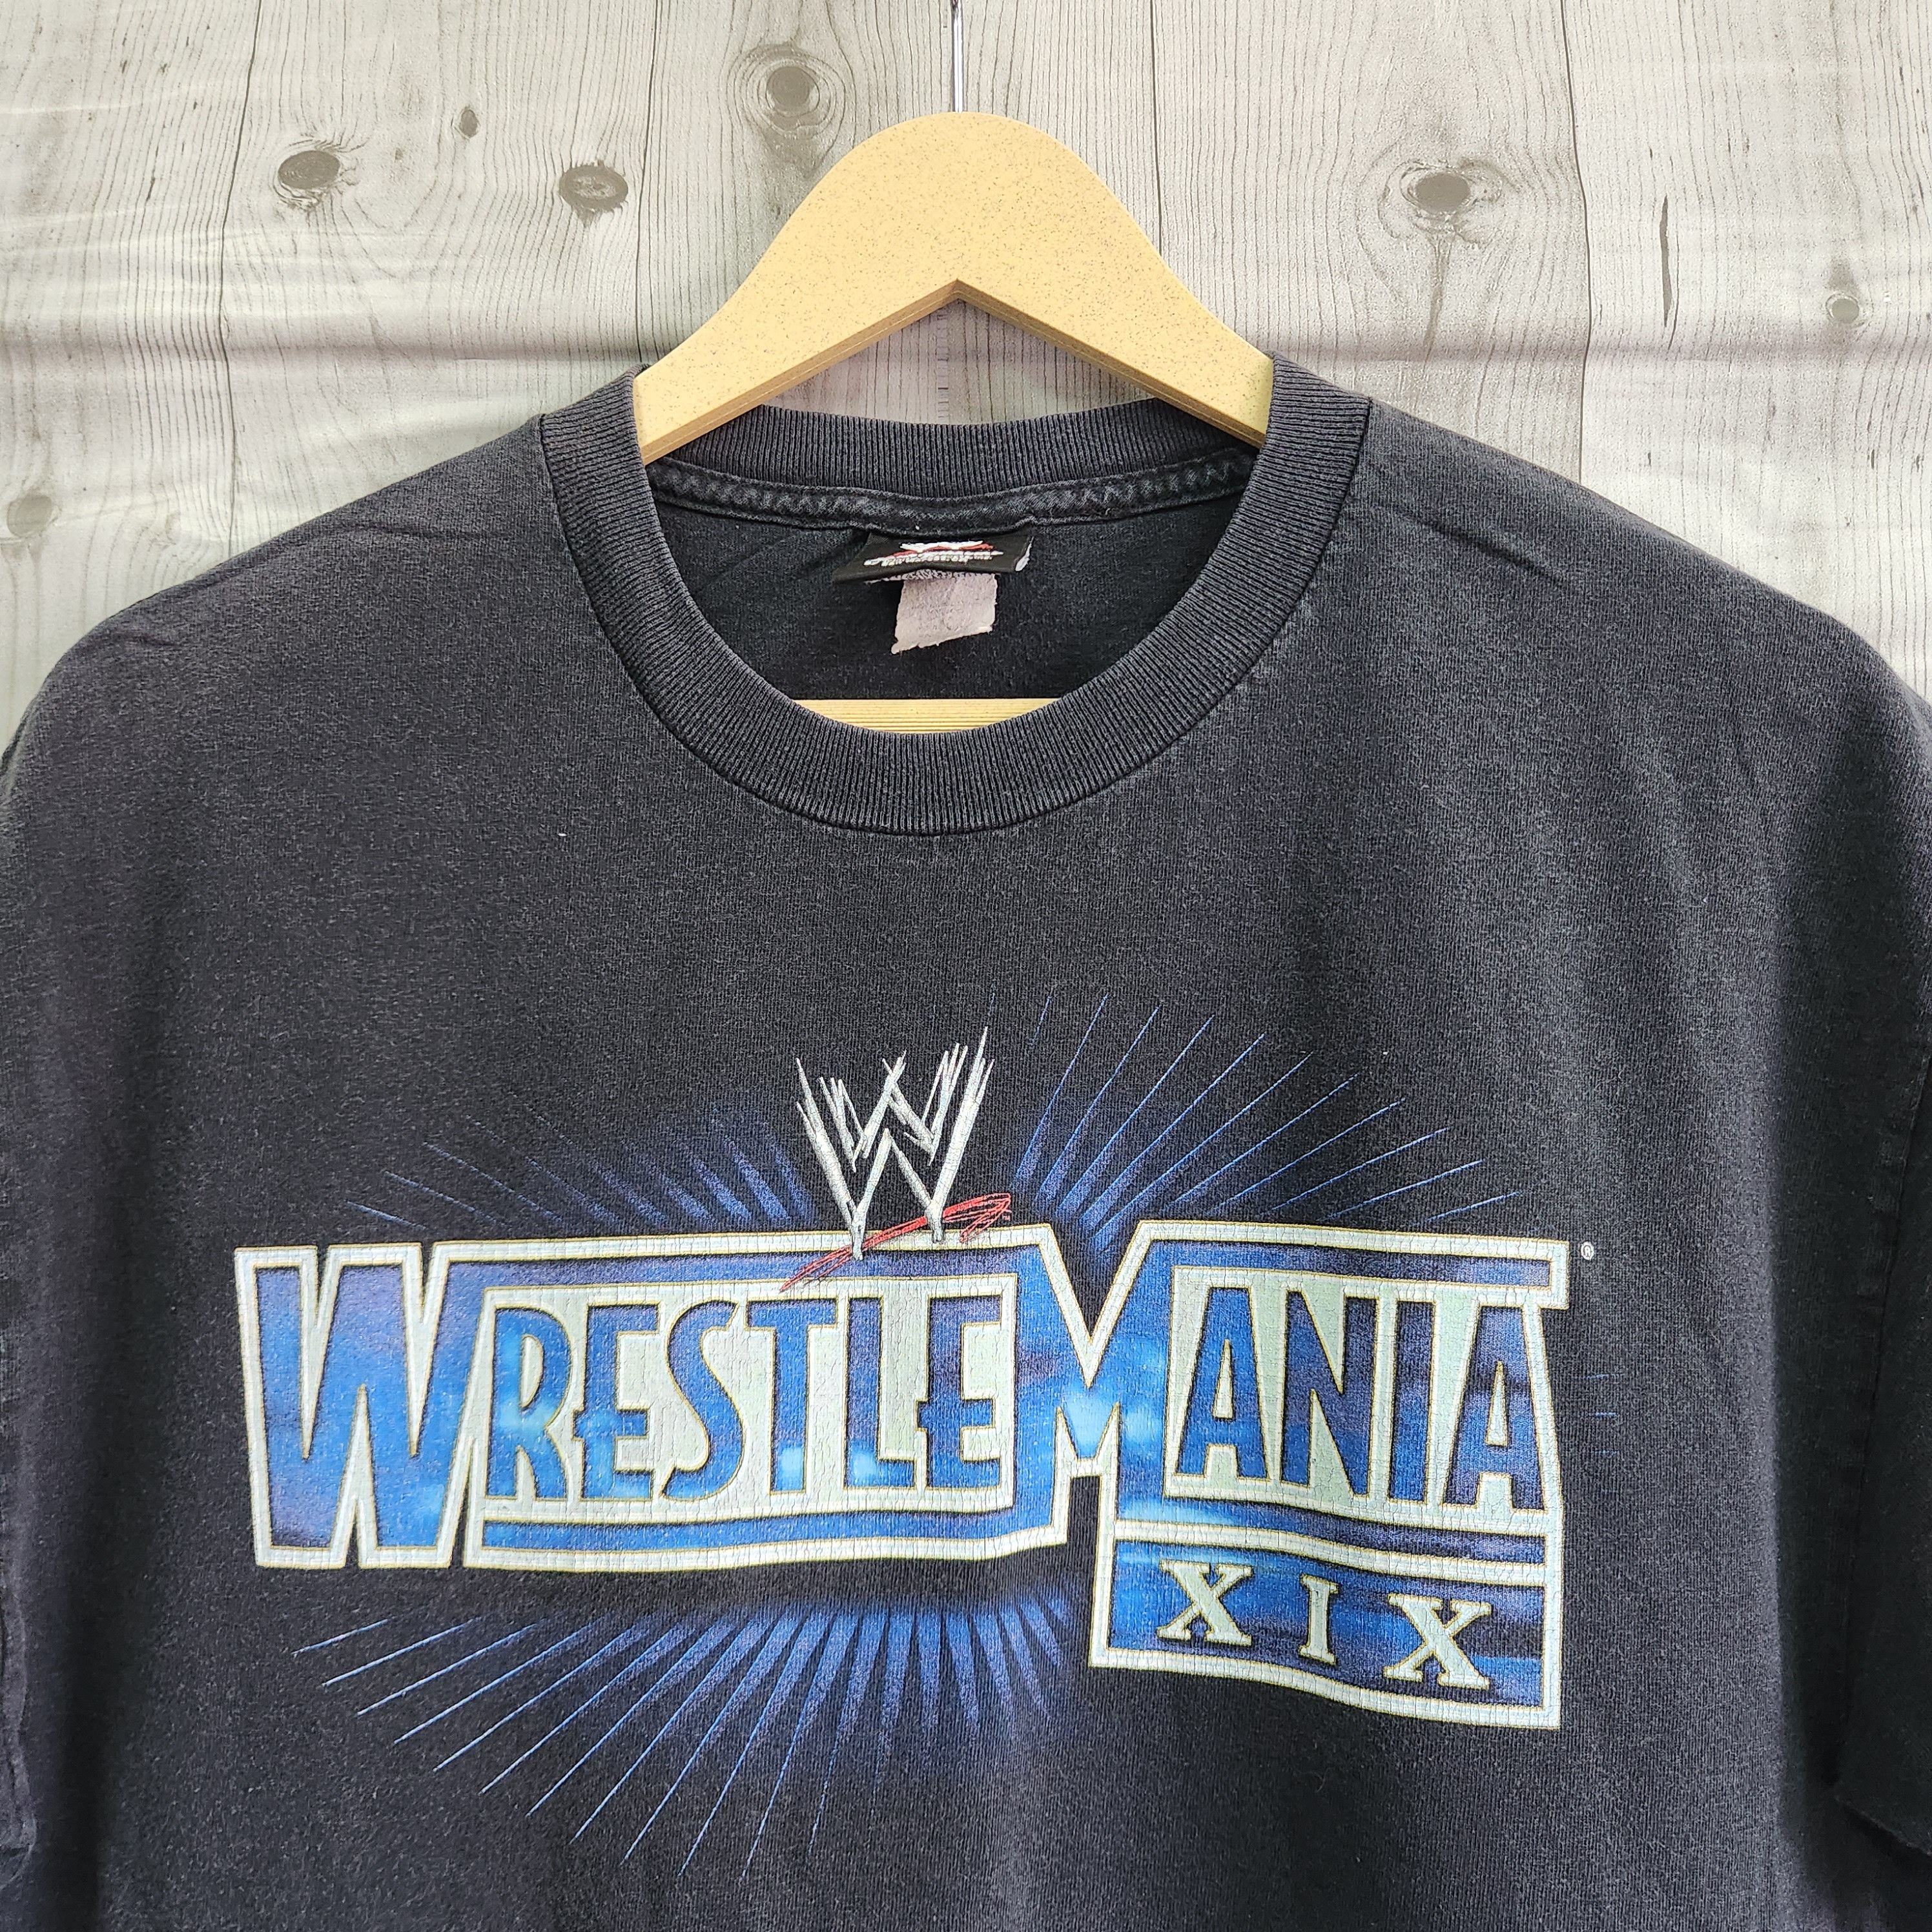 Vintage WWE WrestleMania XIX Copyright 2003 - 2